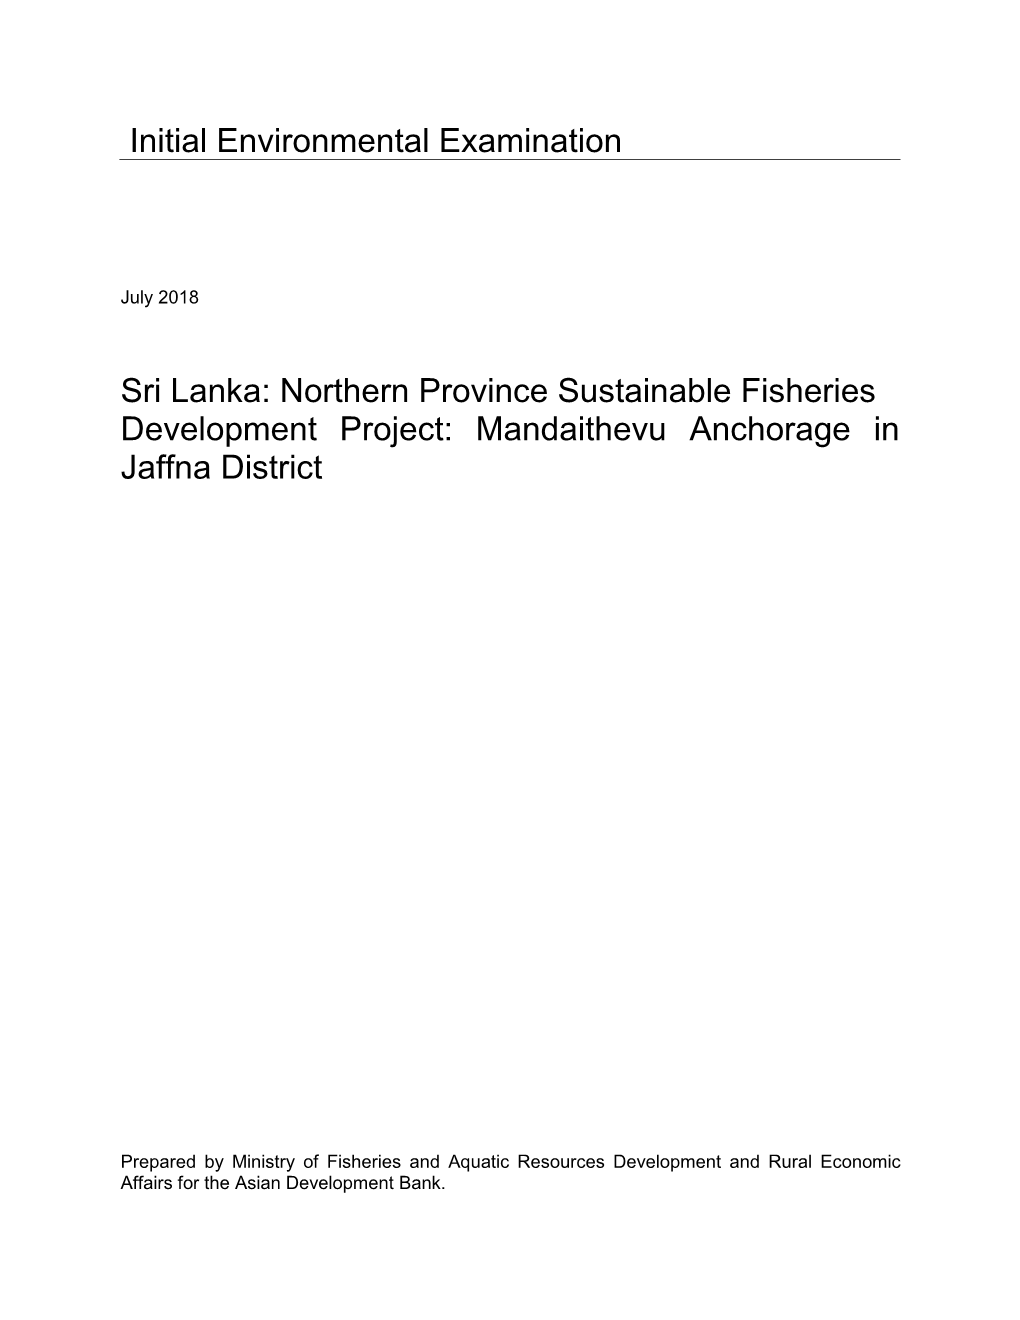 Initial Environmental Examination Sri Lanka